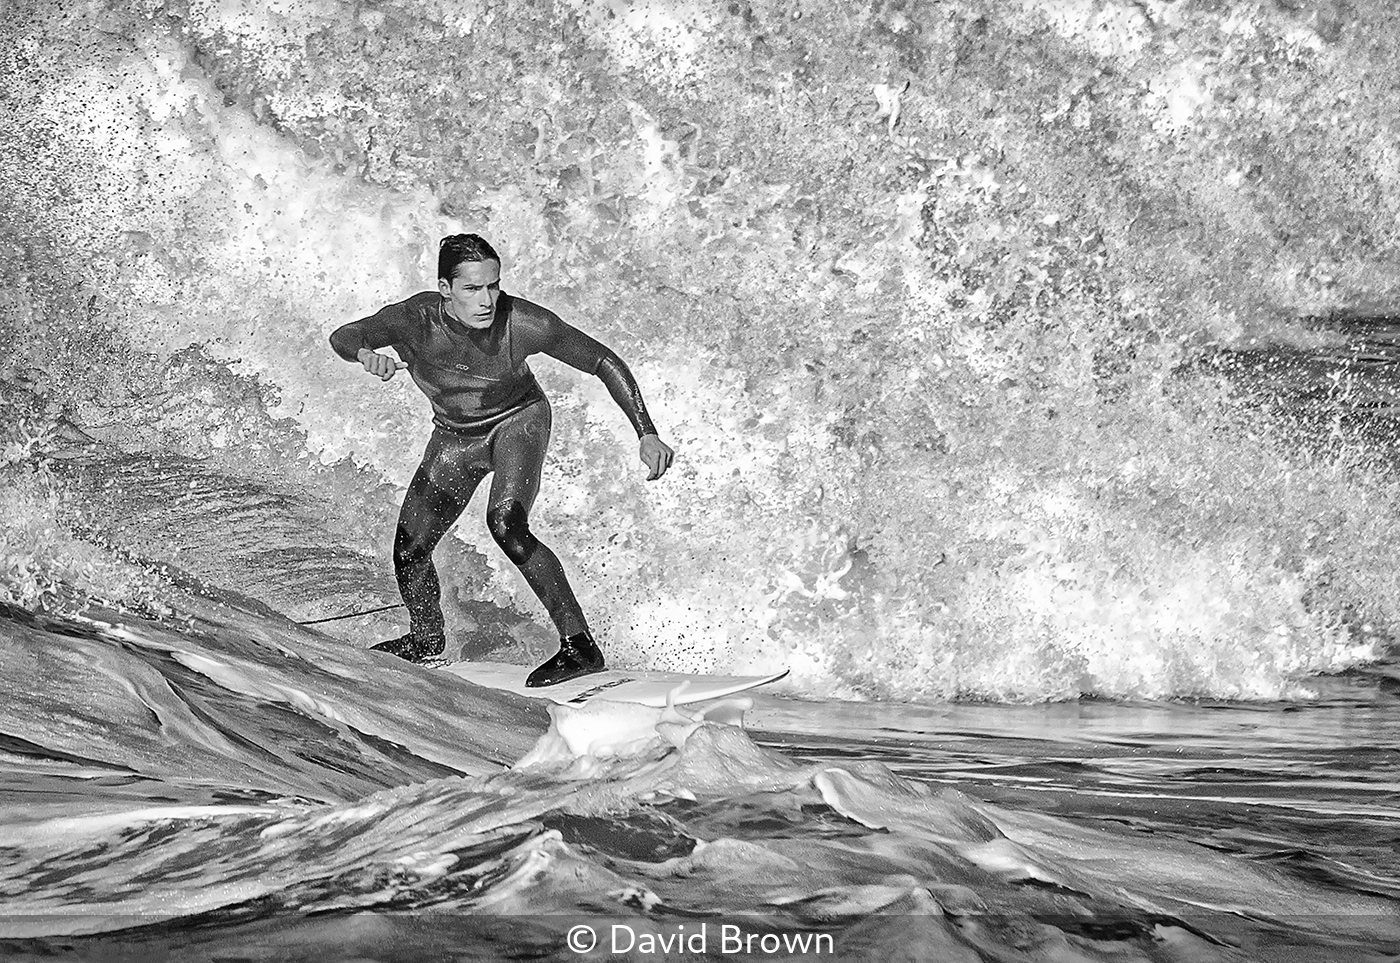 David Brown_Riding The Atlantic Surf